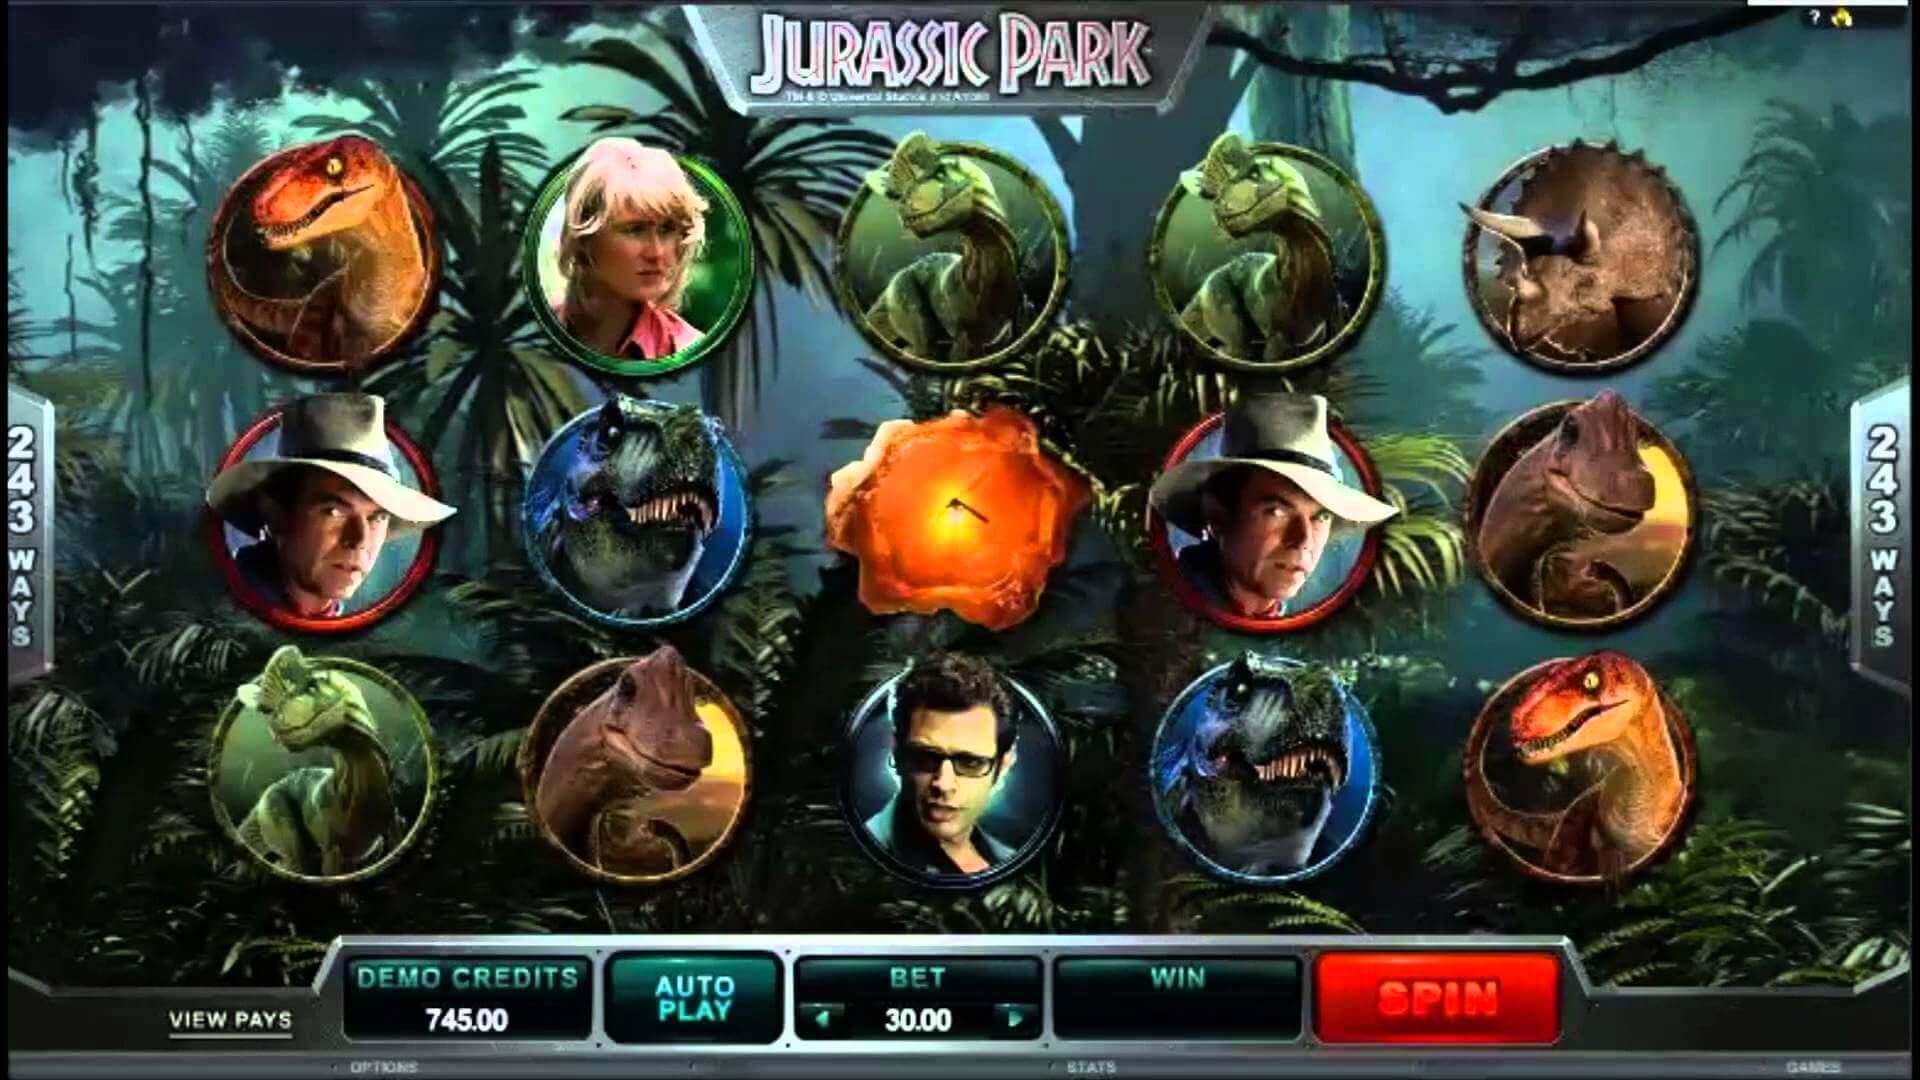 SCR888-Casino-Slot-Game-Jurassic-Park-Free-Play2